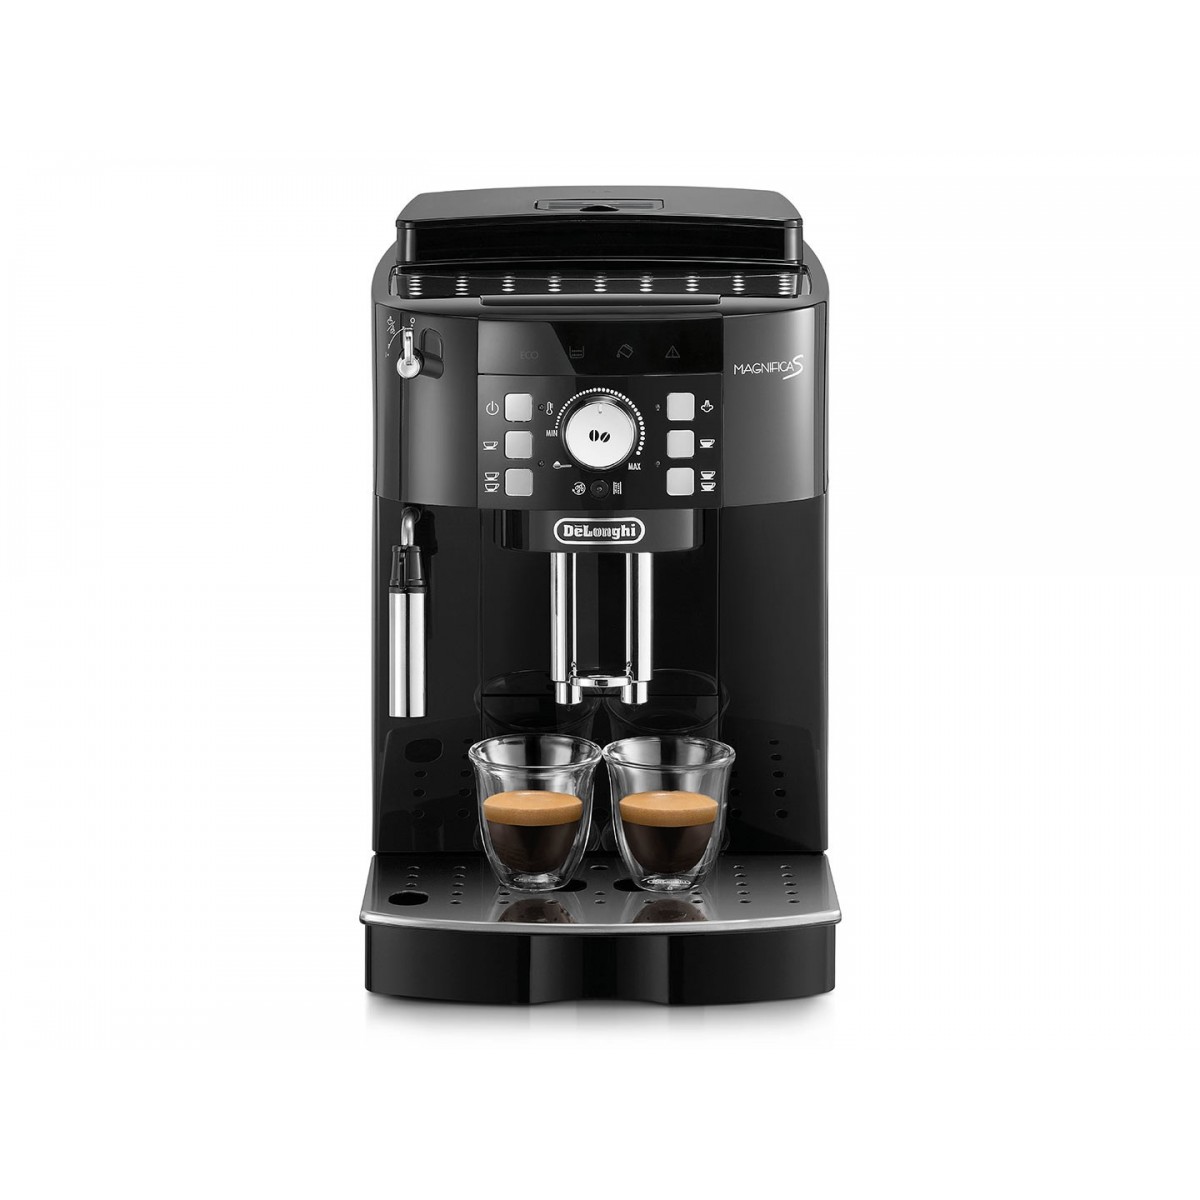 De Longhi Magnifica S ECAM 21.117.B - Espresso machine - 1.8 L - Coffee beans,Ground coffee - Built-in grinder - 1450 W - Black